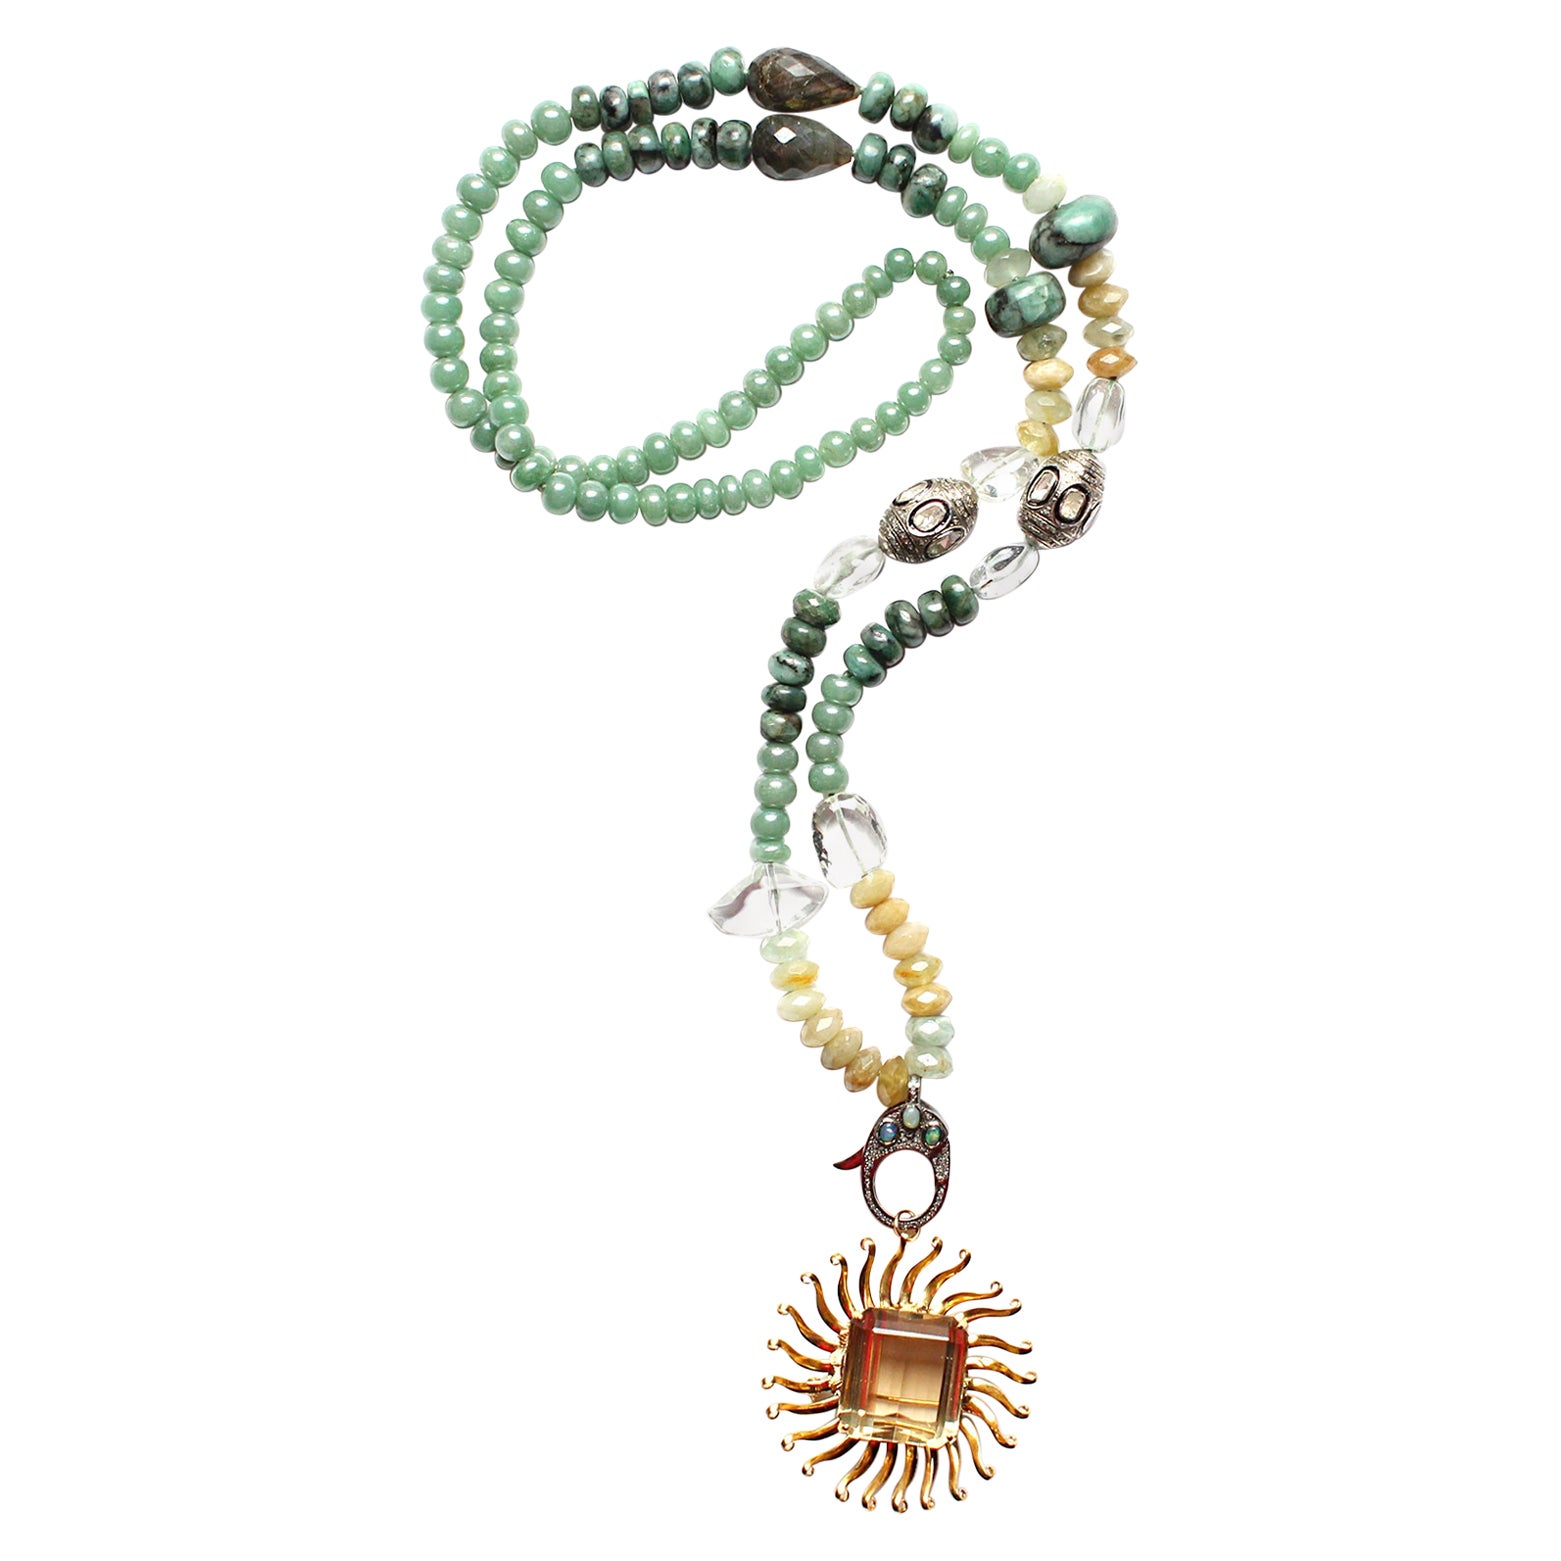 Clarissa Bronfman, collier pendentif soleil en perles, opale, jade, pierre de lune, diamant et citrine